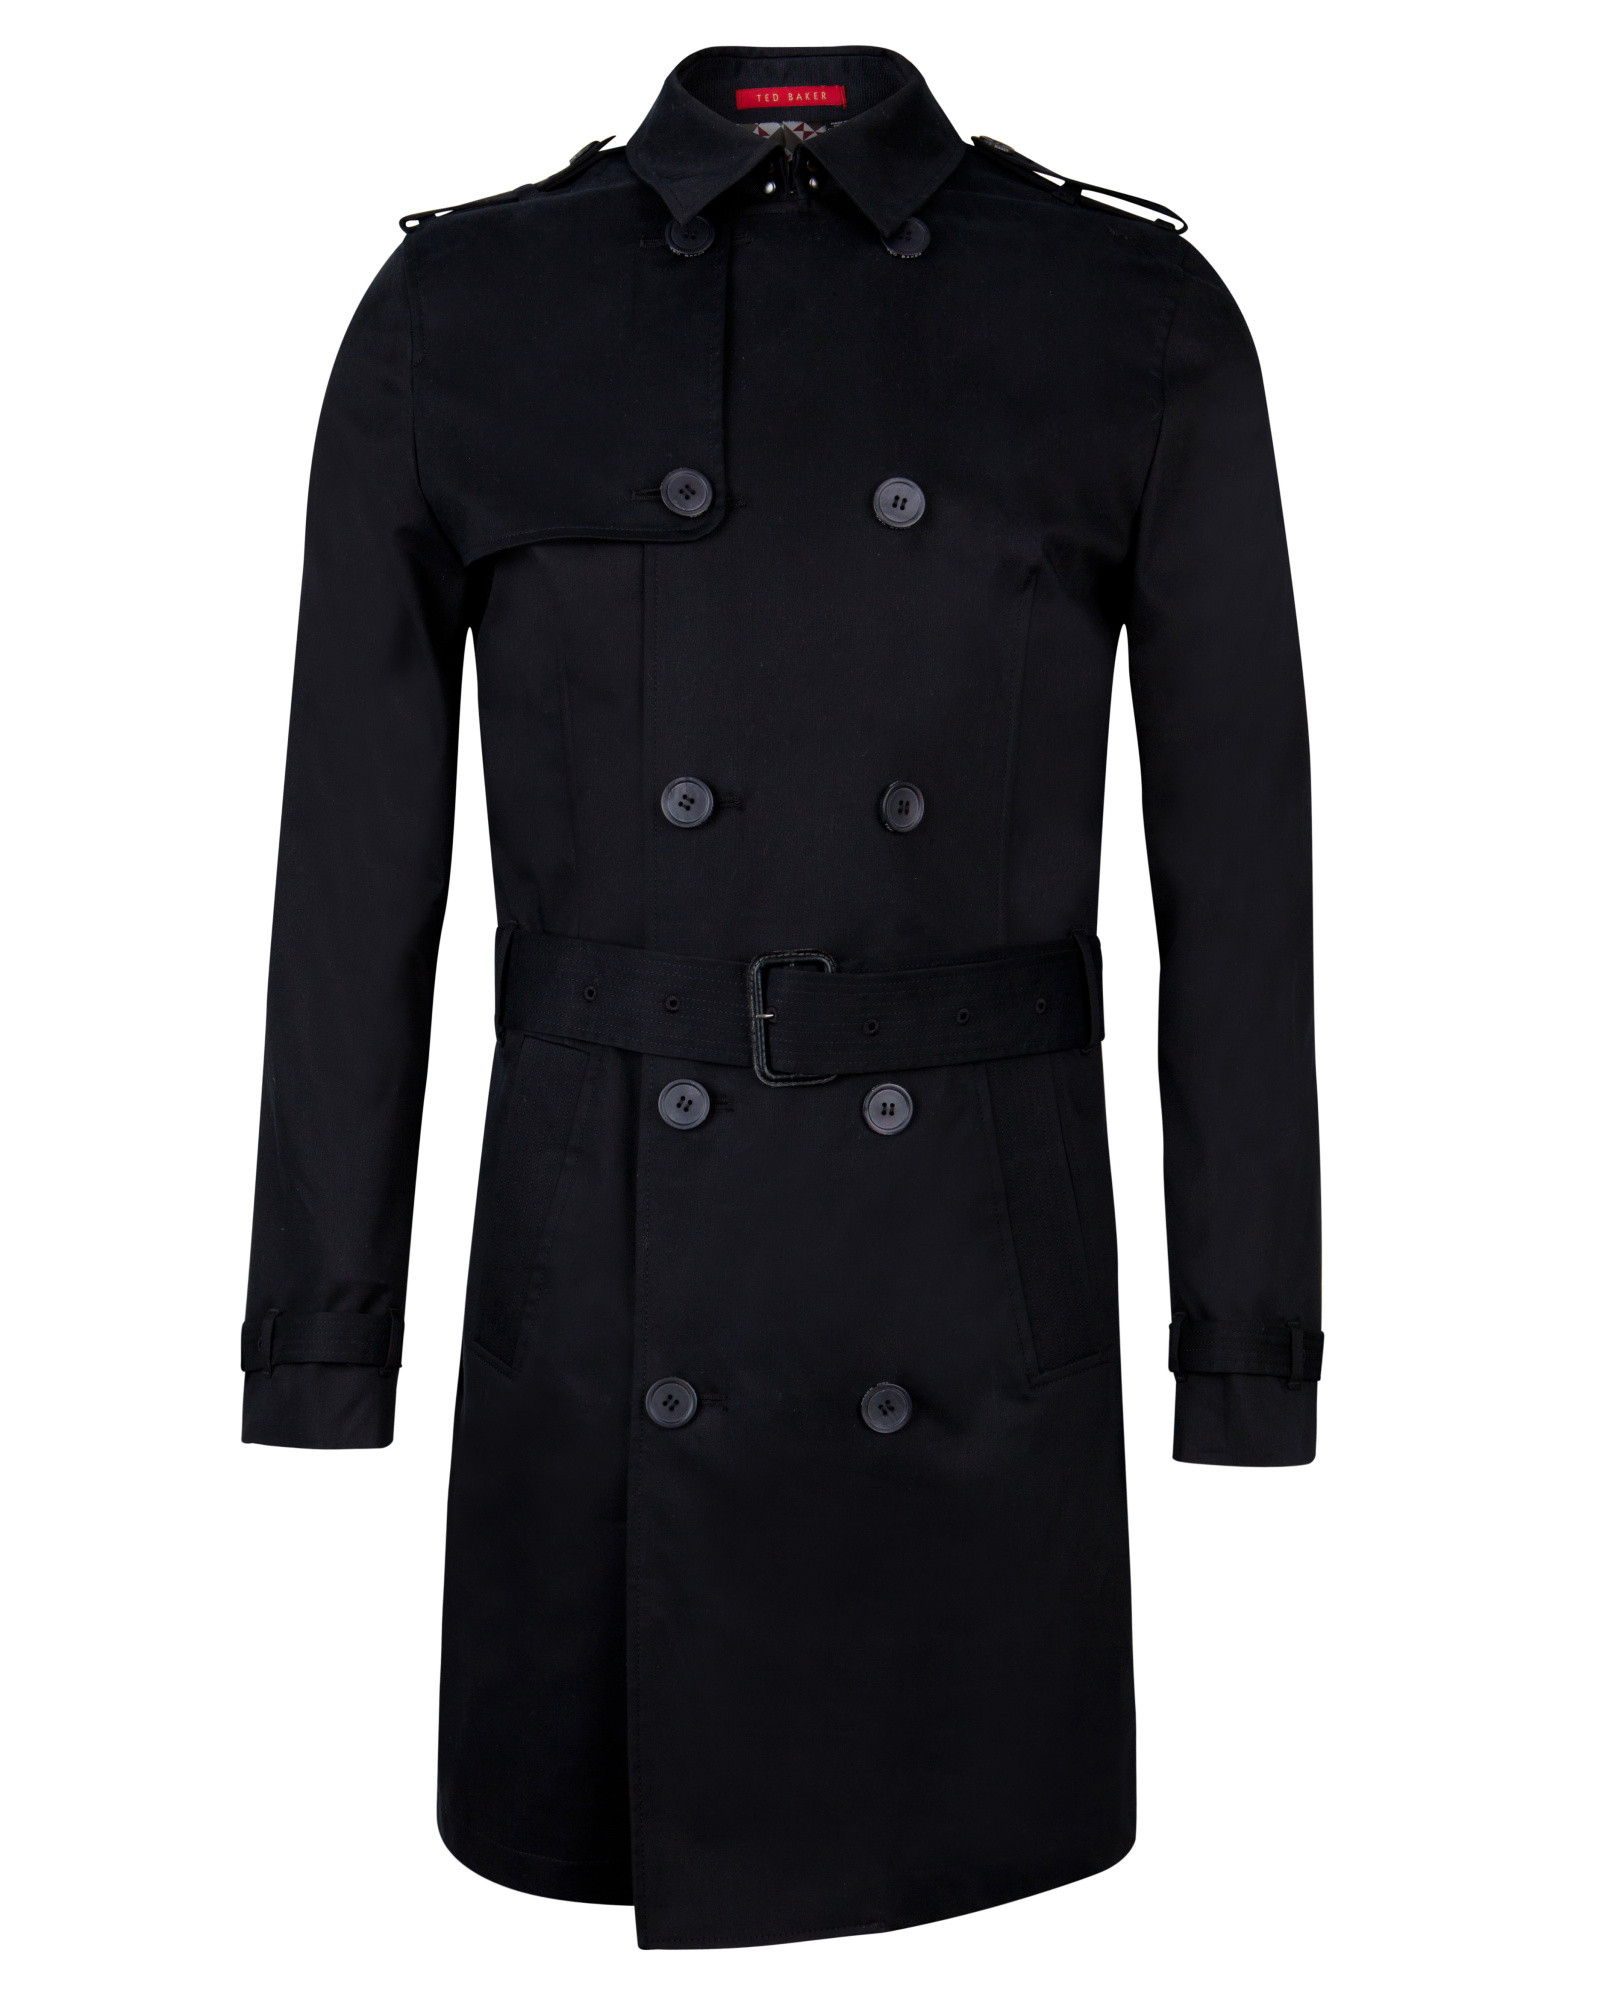 Ted baker Debonair Trench Coat in Black for Men | Lyst